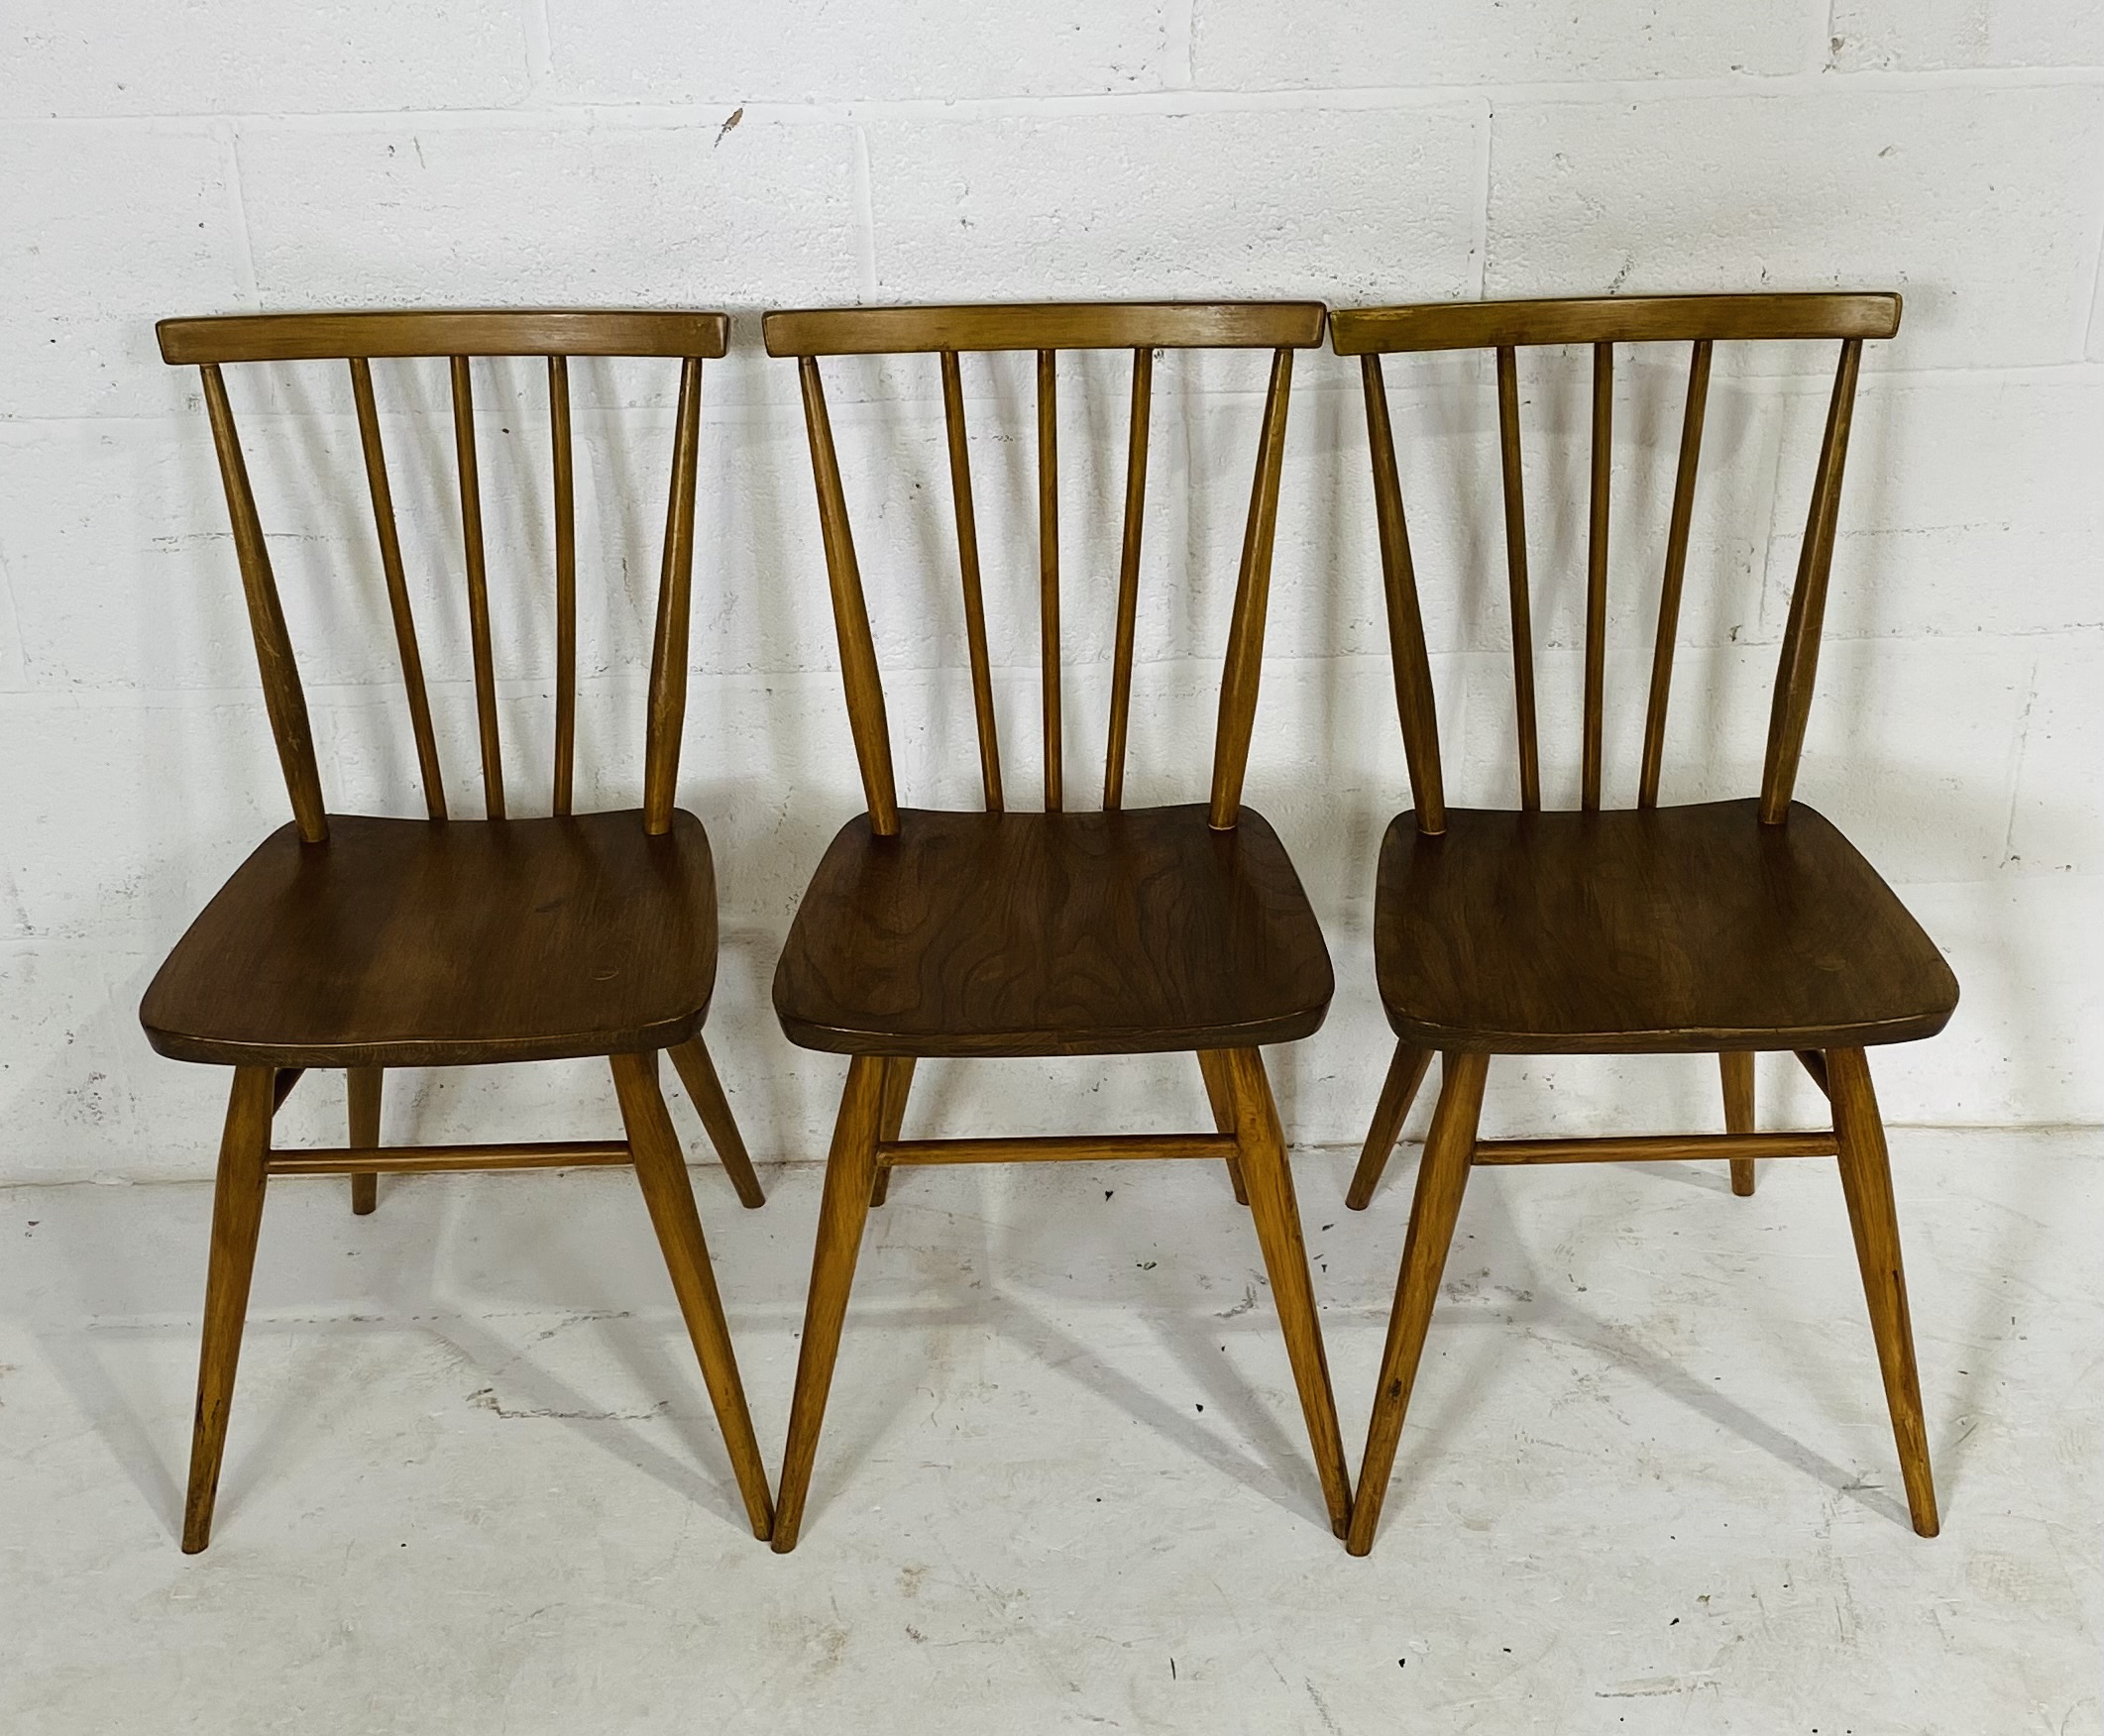 Three vintage Ercol chairs